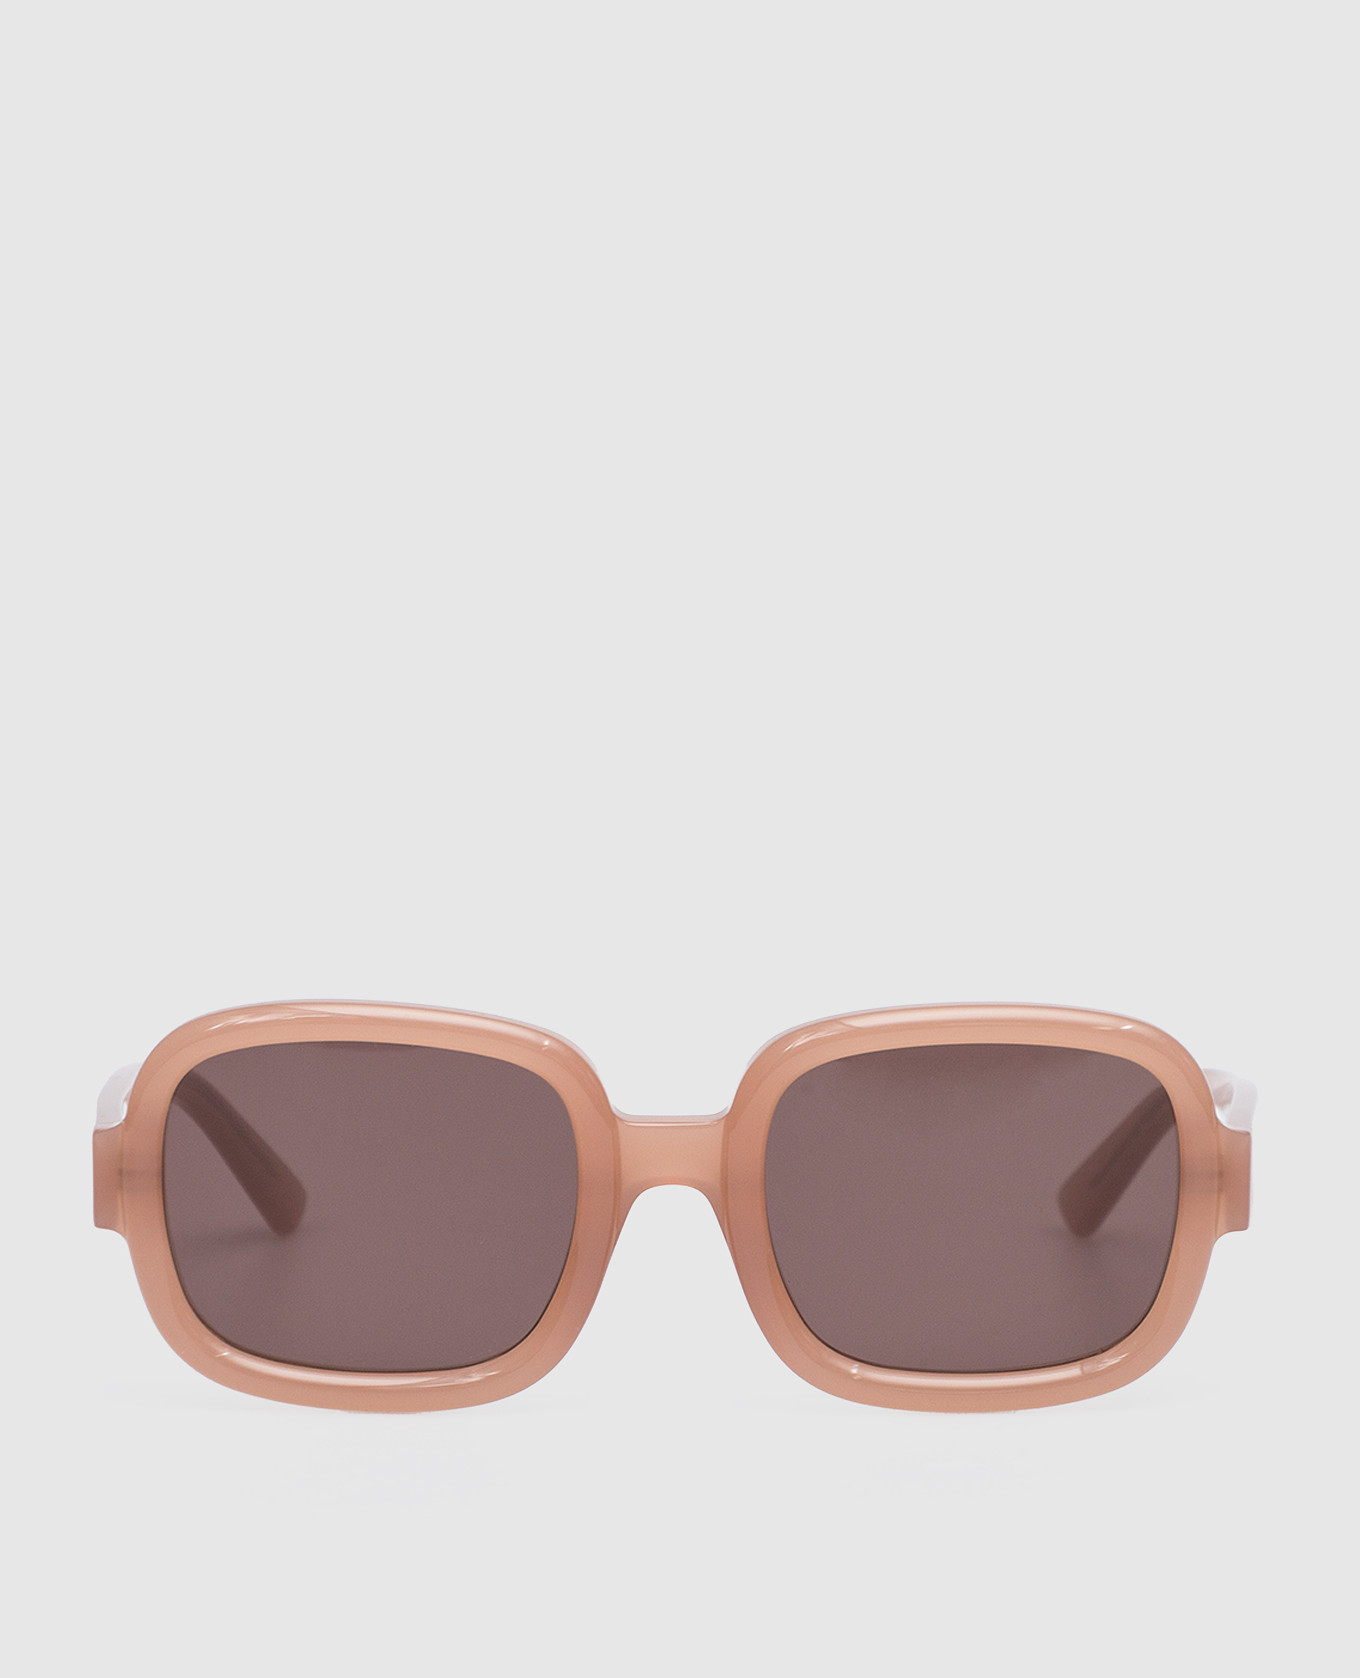 Mylz logo sunglasses in beige